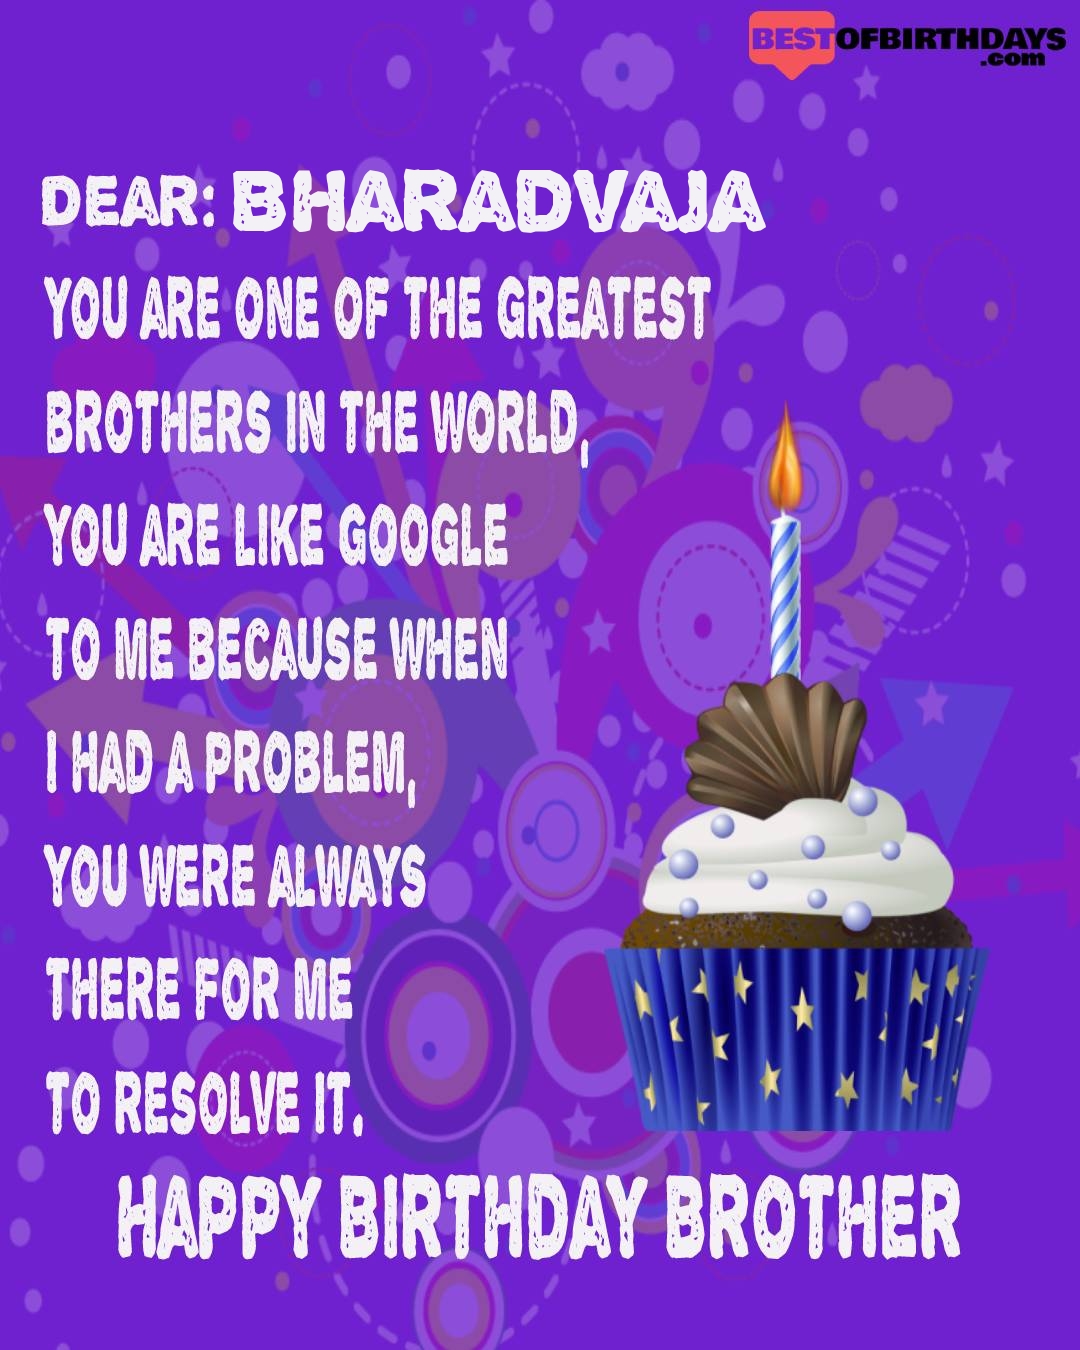 Happy birthday bharadvaja bhai brother bro